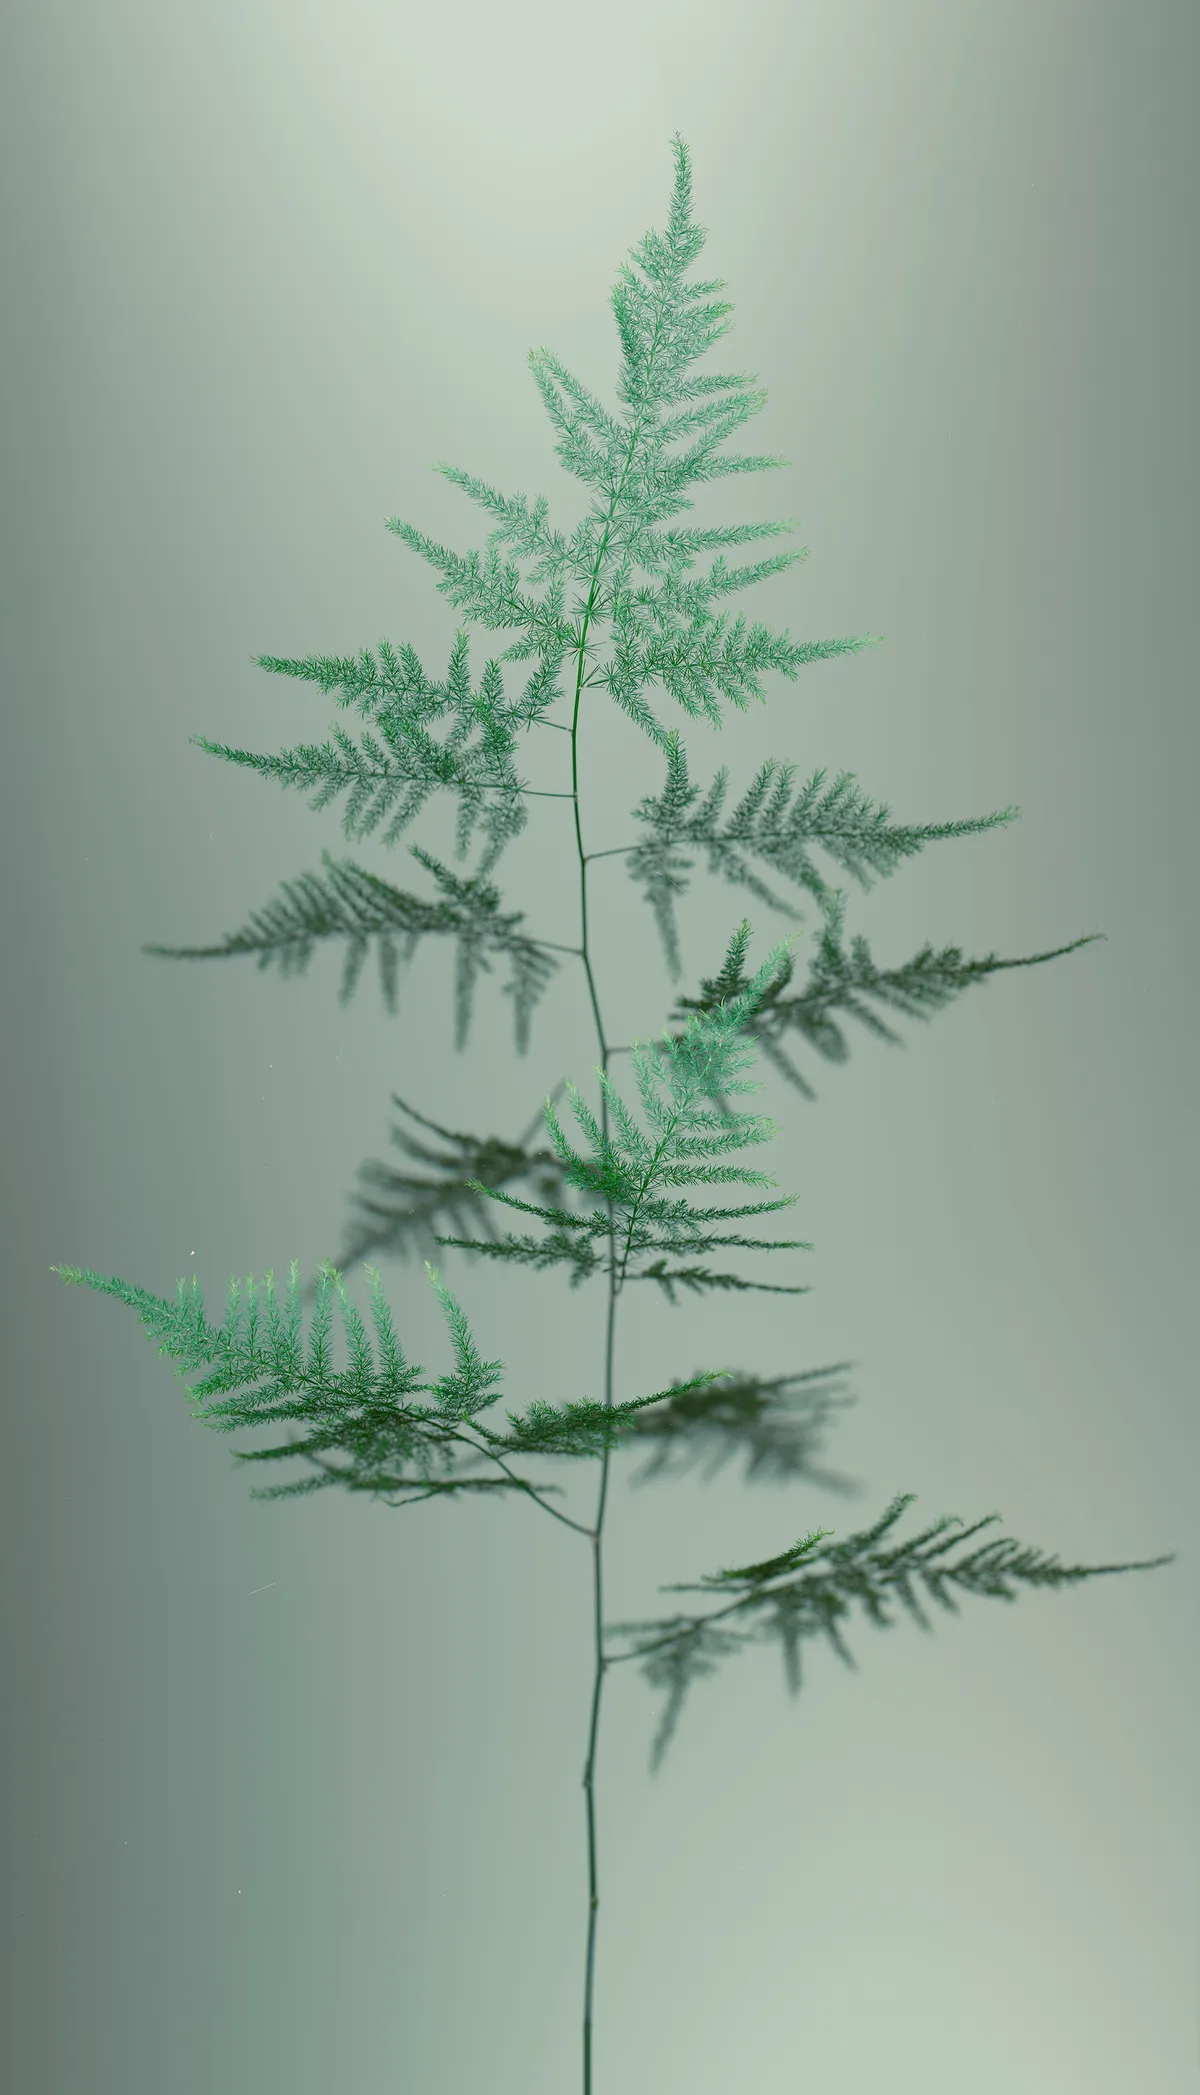 Lace fern (asparagus setaceus) by Sandra Kantanen